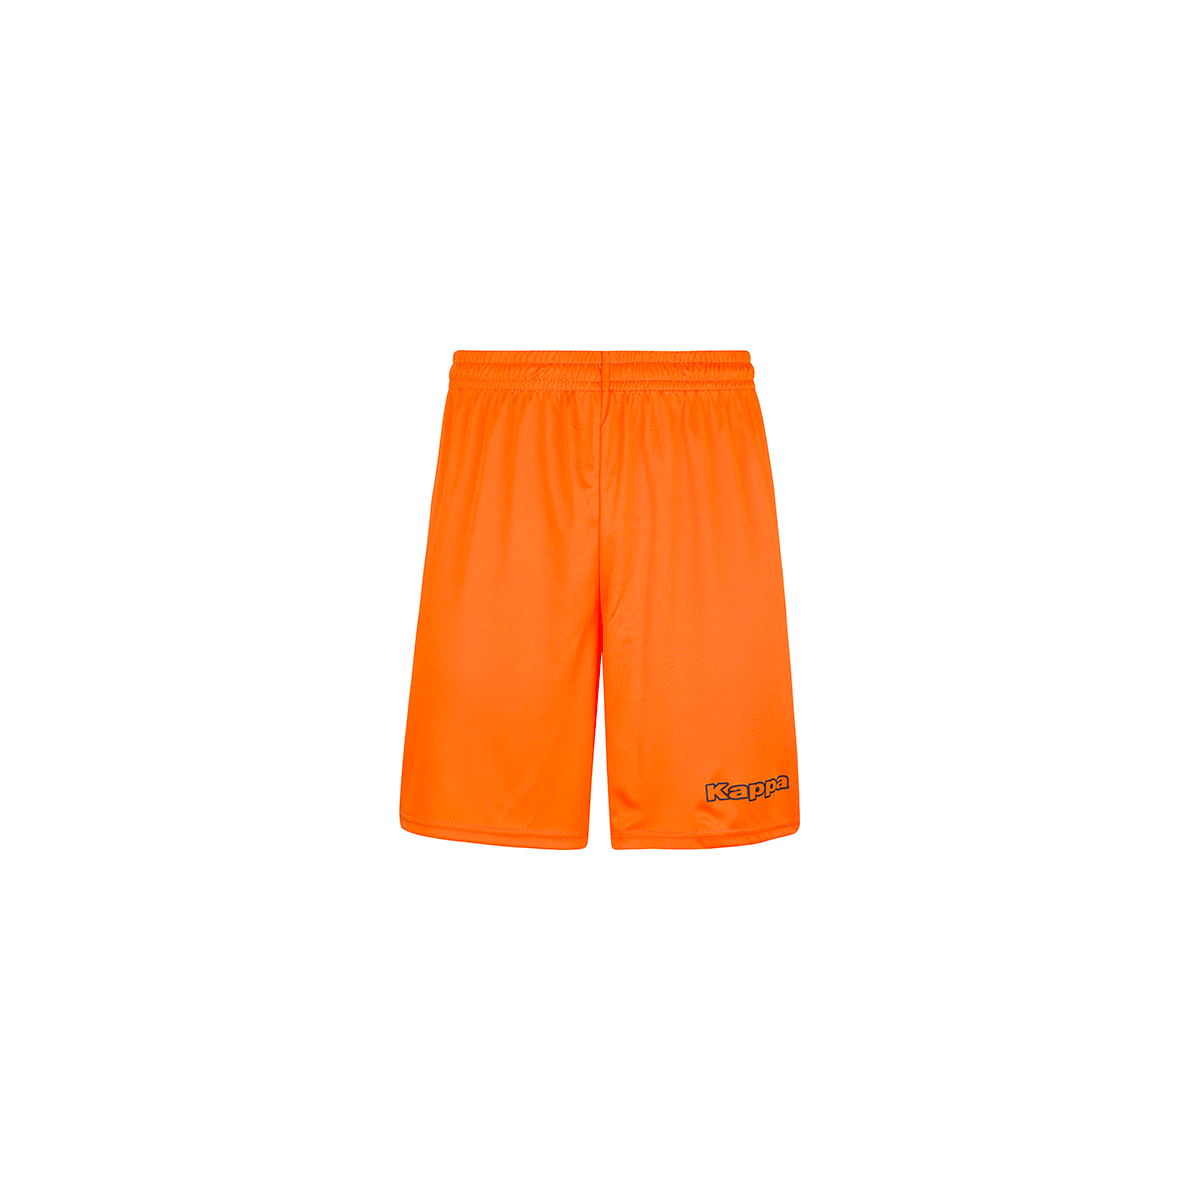 Short Curchet Orange Homme - image 1